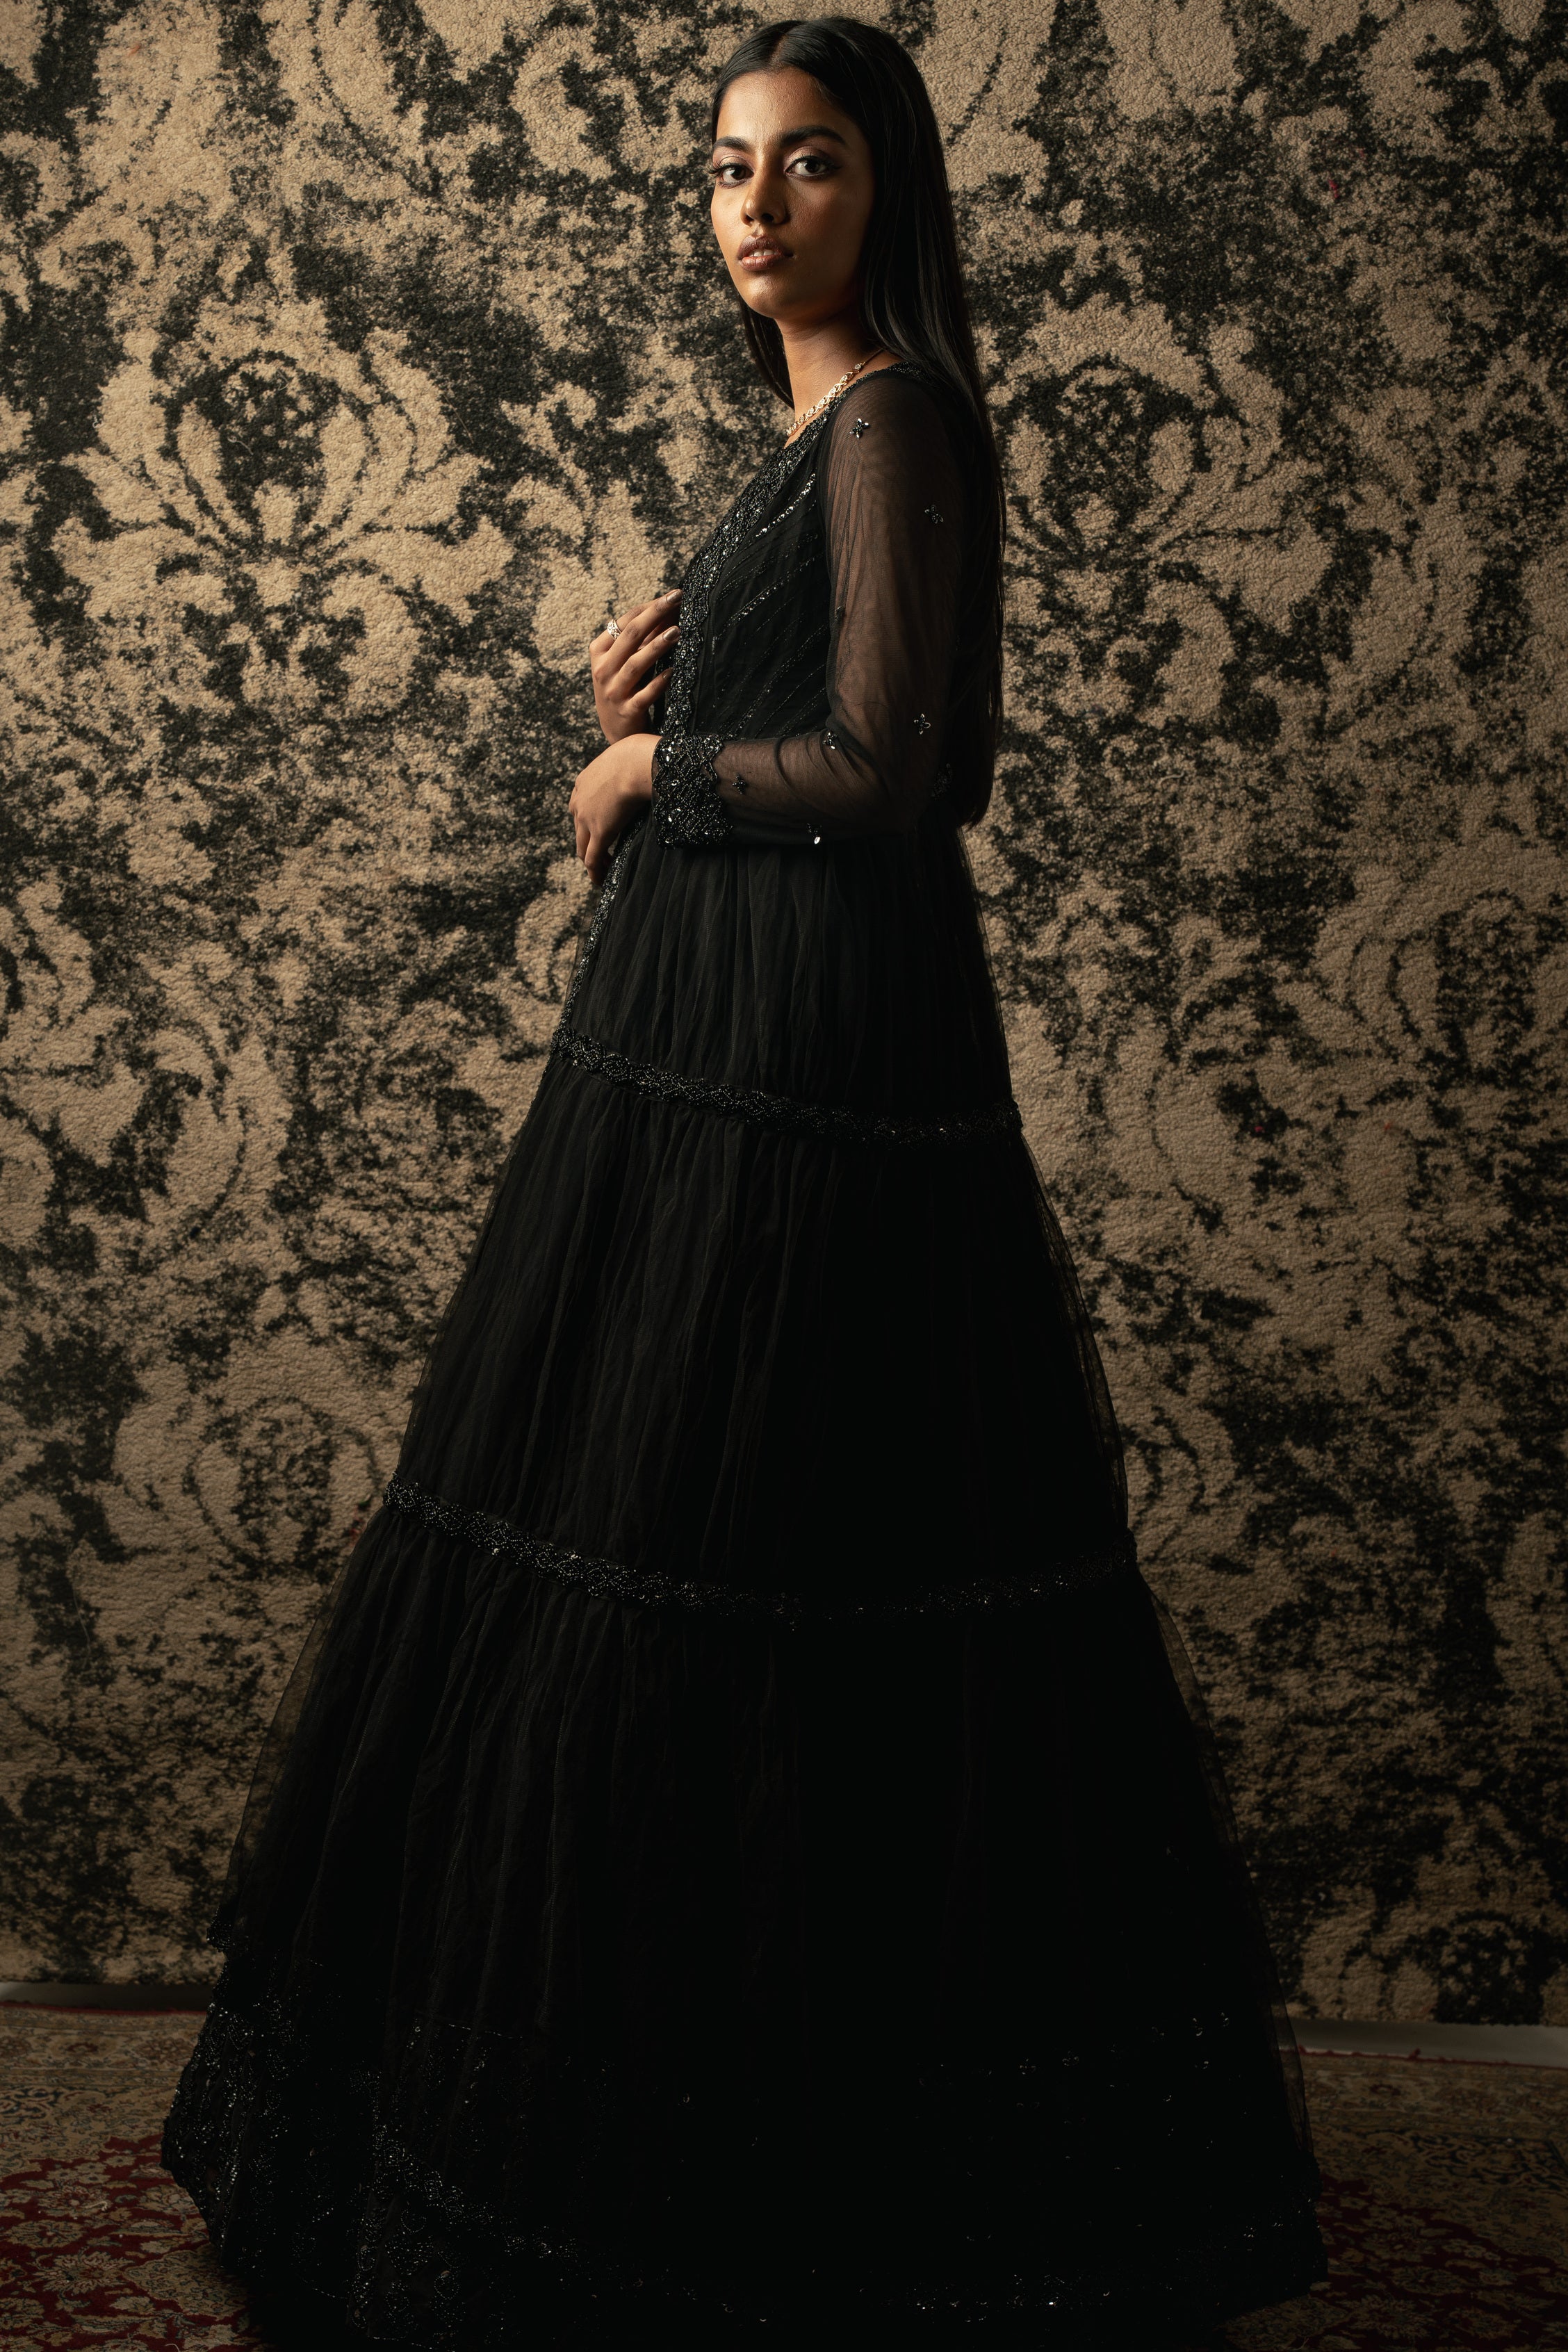 Effortless grace meets sheer elegance: Black organza Anarkali complemented by a delicate net shrug for a stunning ensemble.